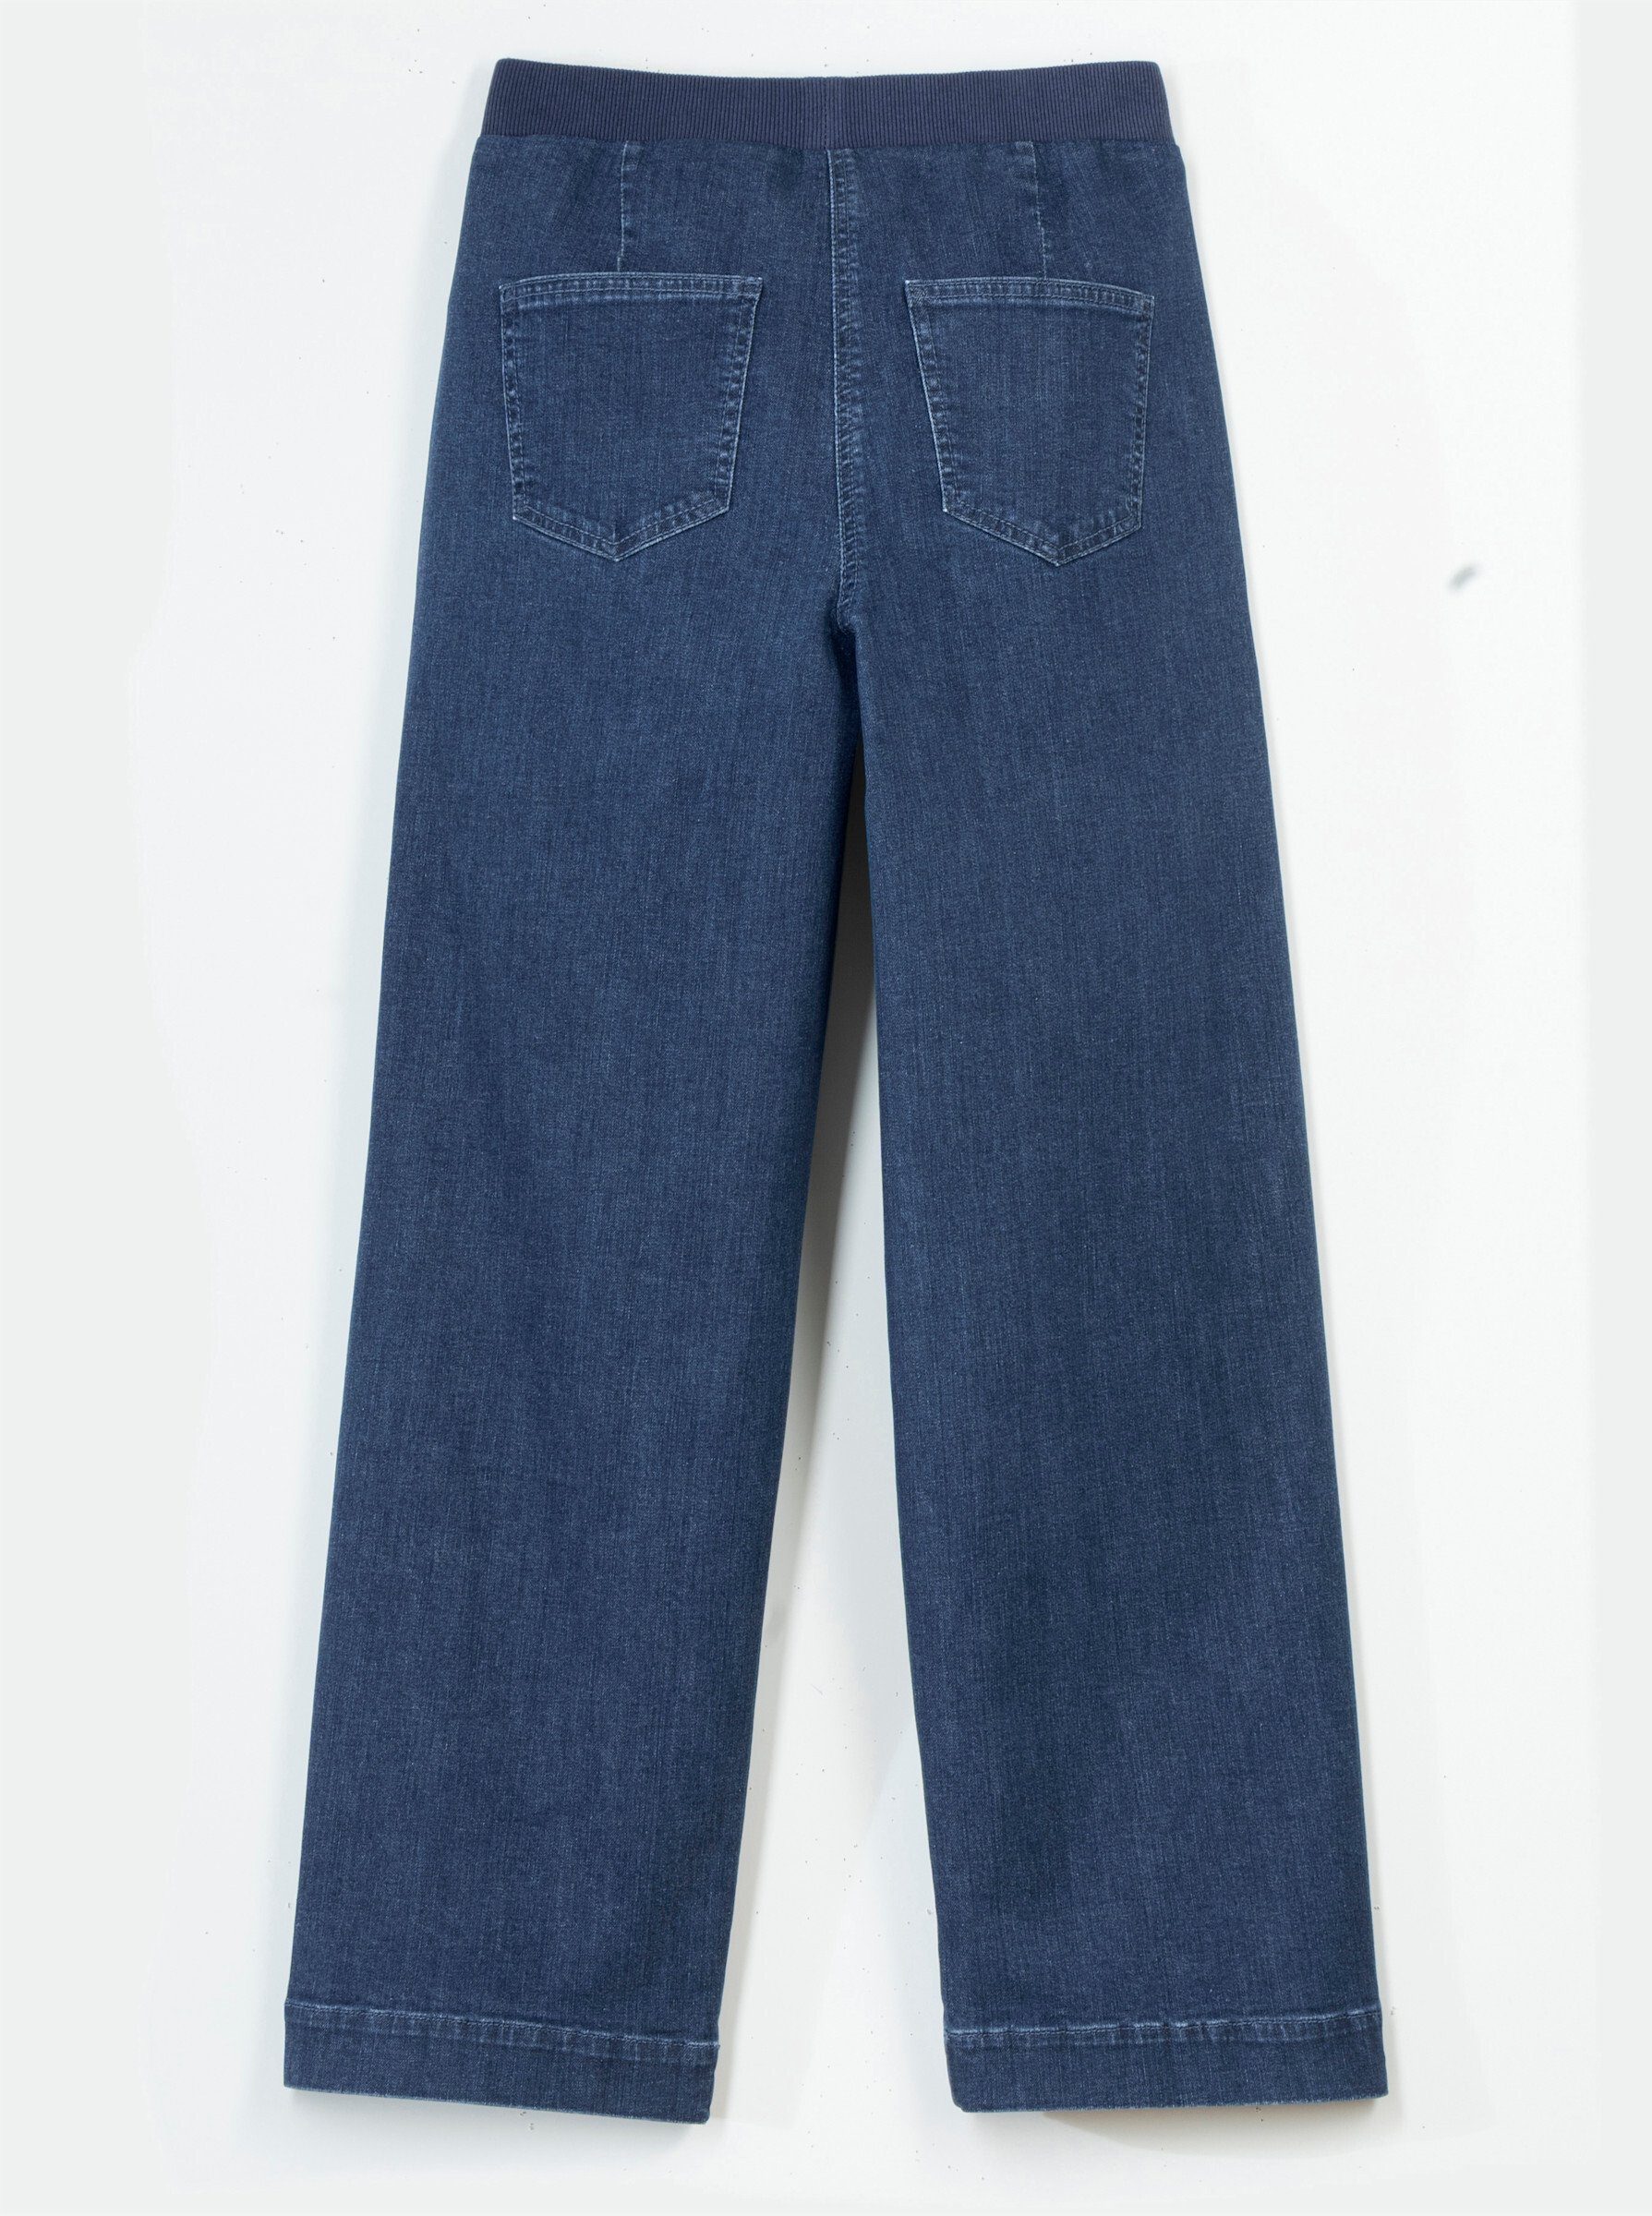 Bequeme WITT blue-stone-washed WEIDEN Jeans